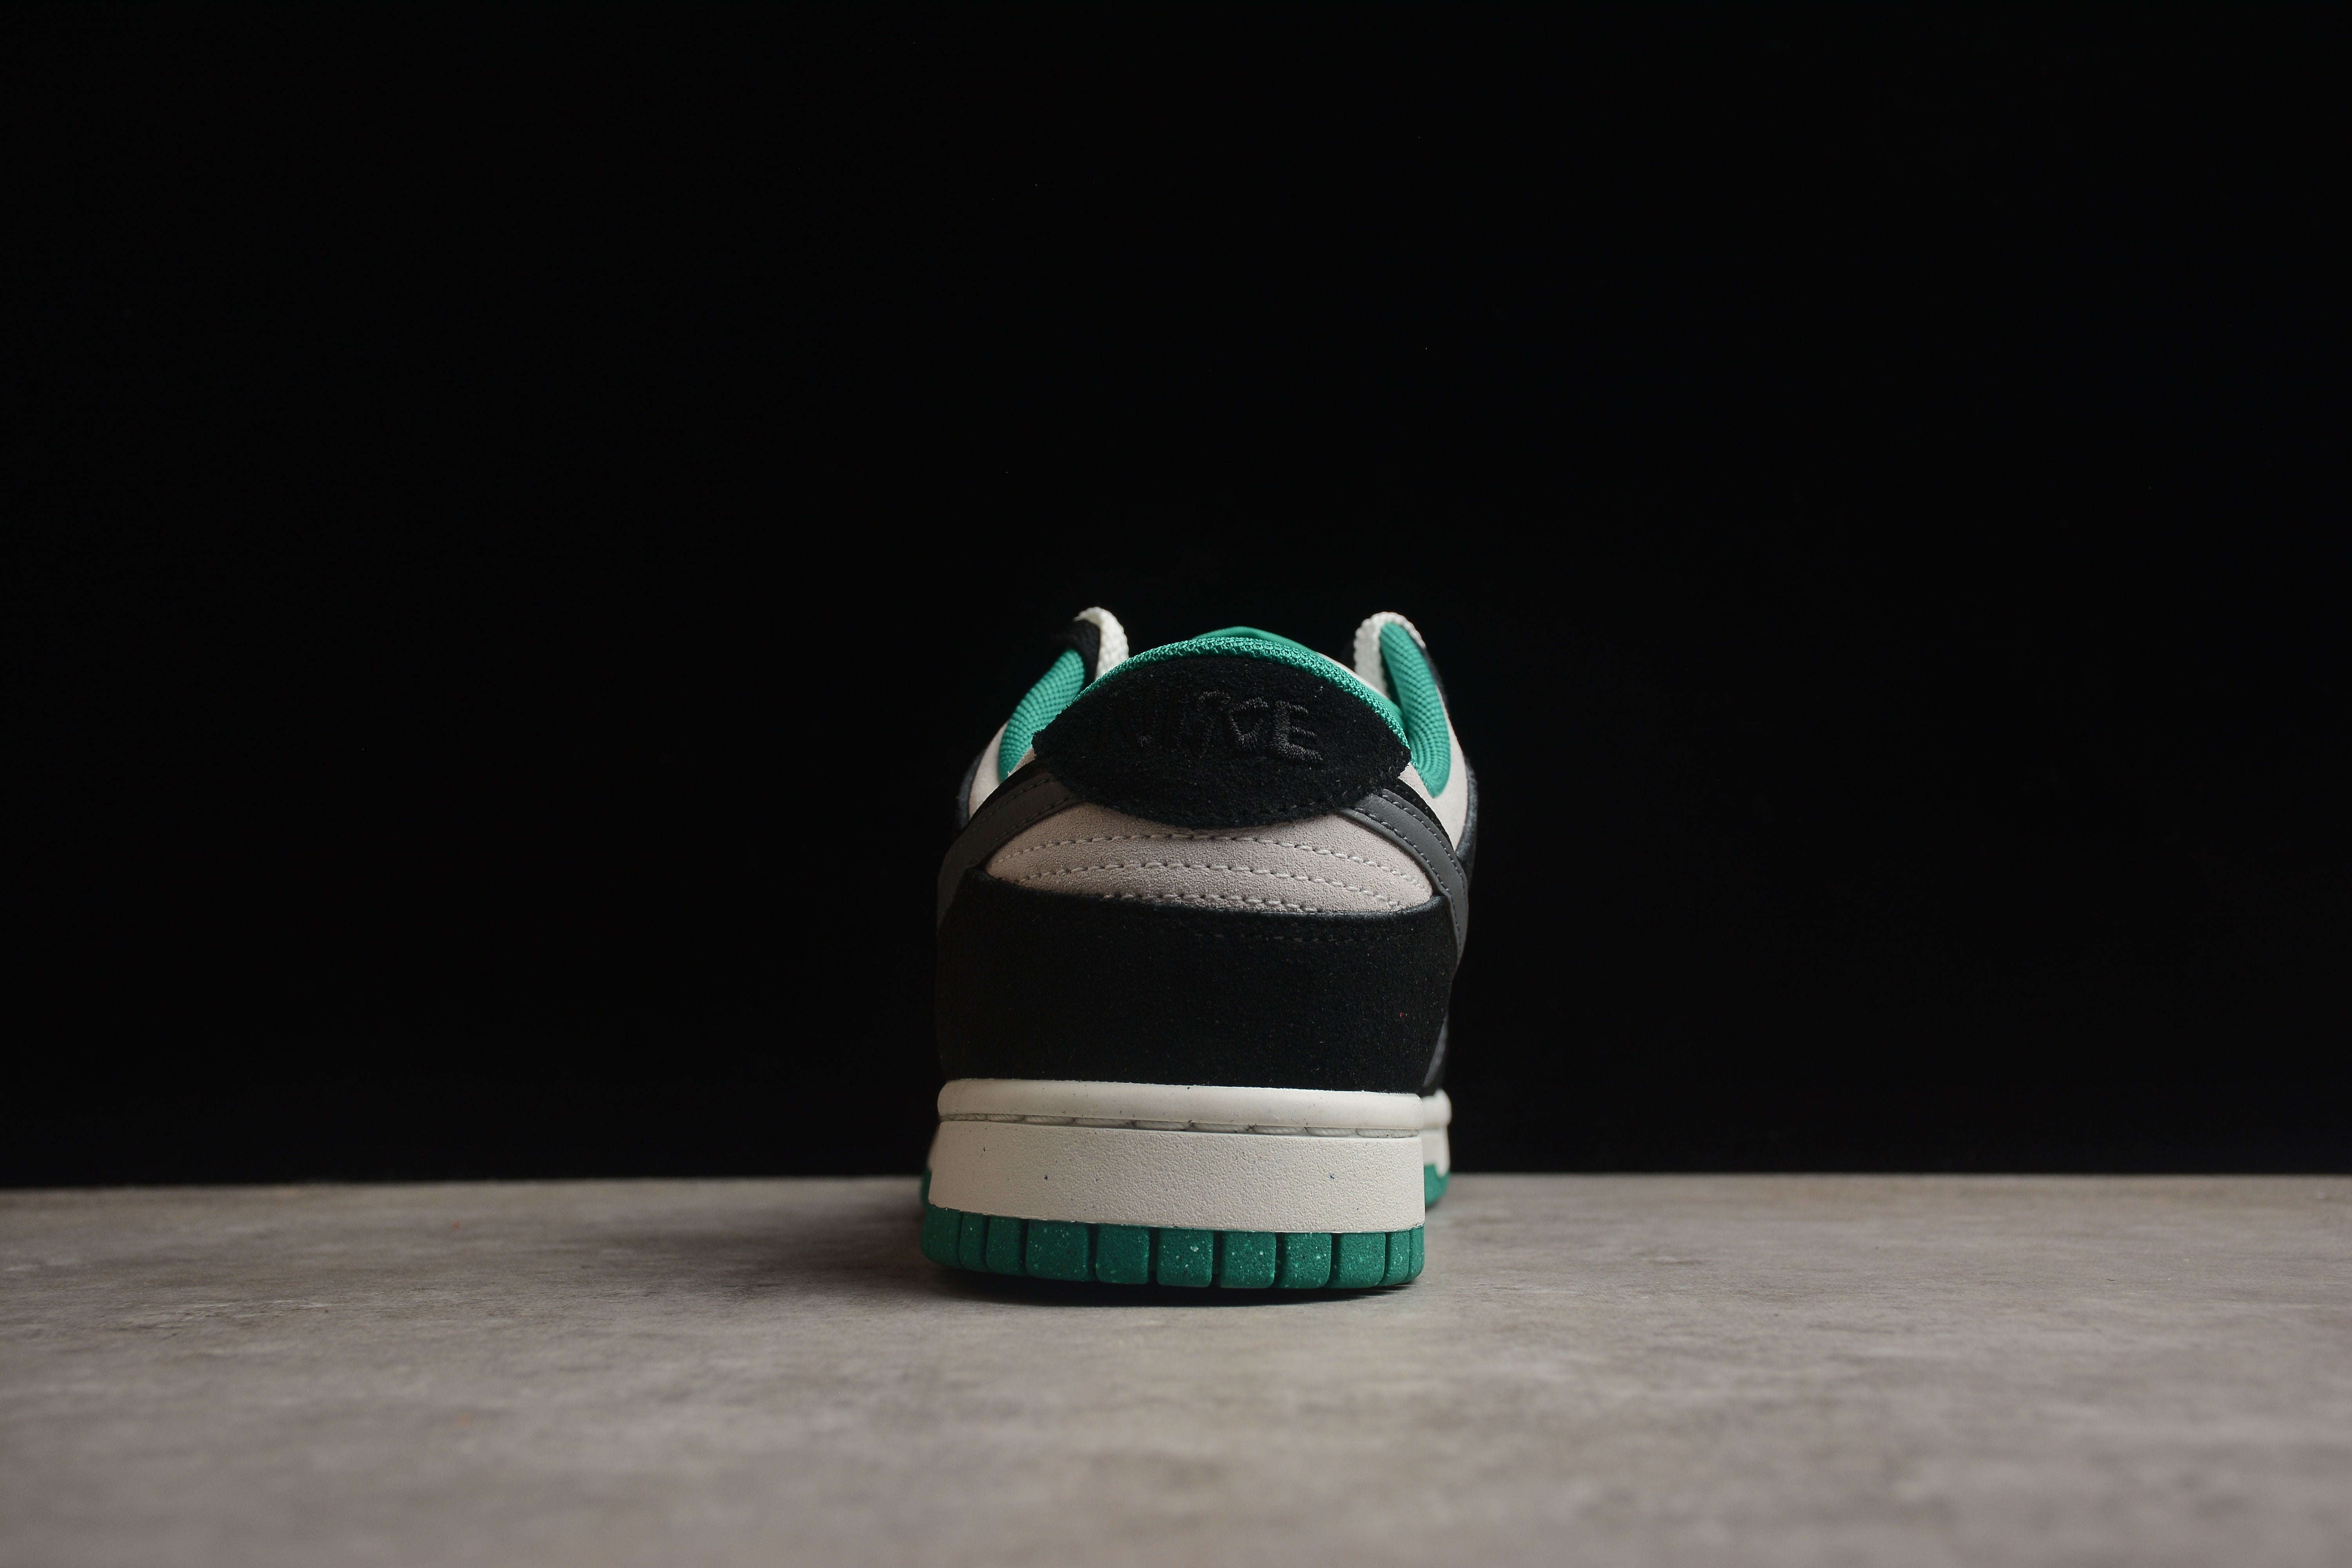 Nike SB dunk low black green shoes